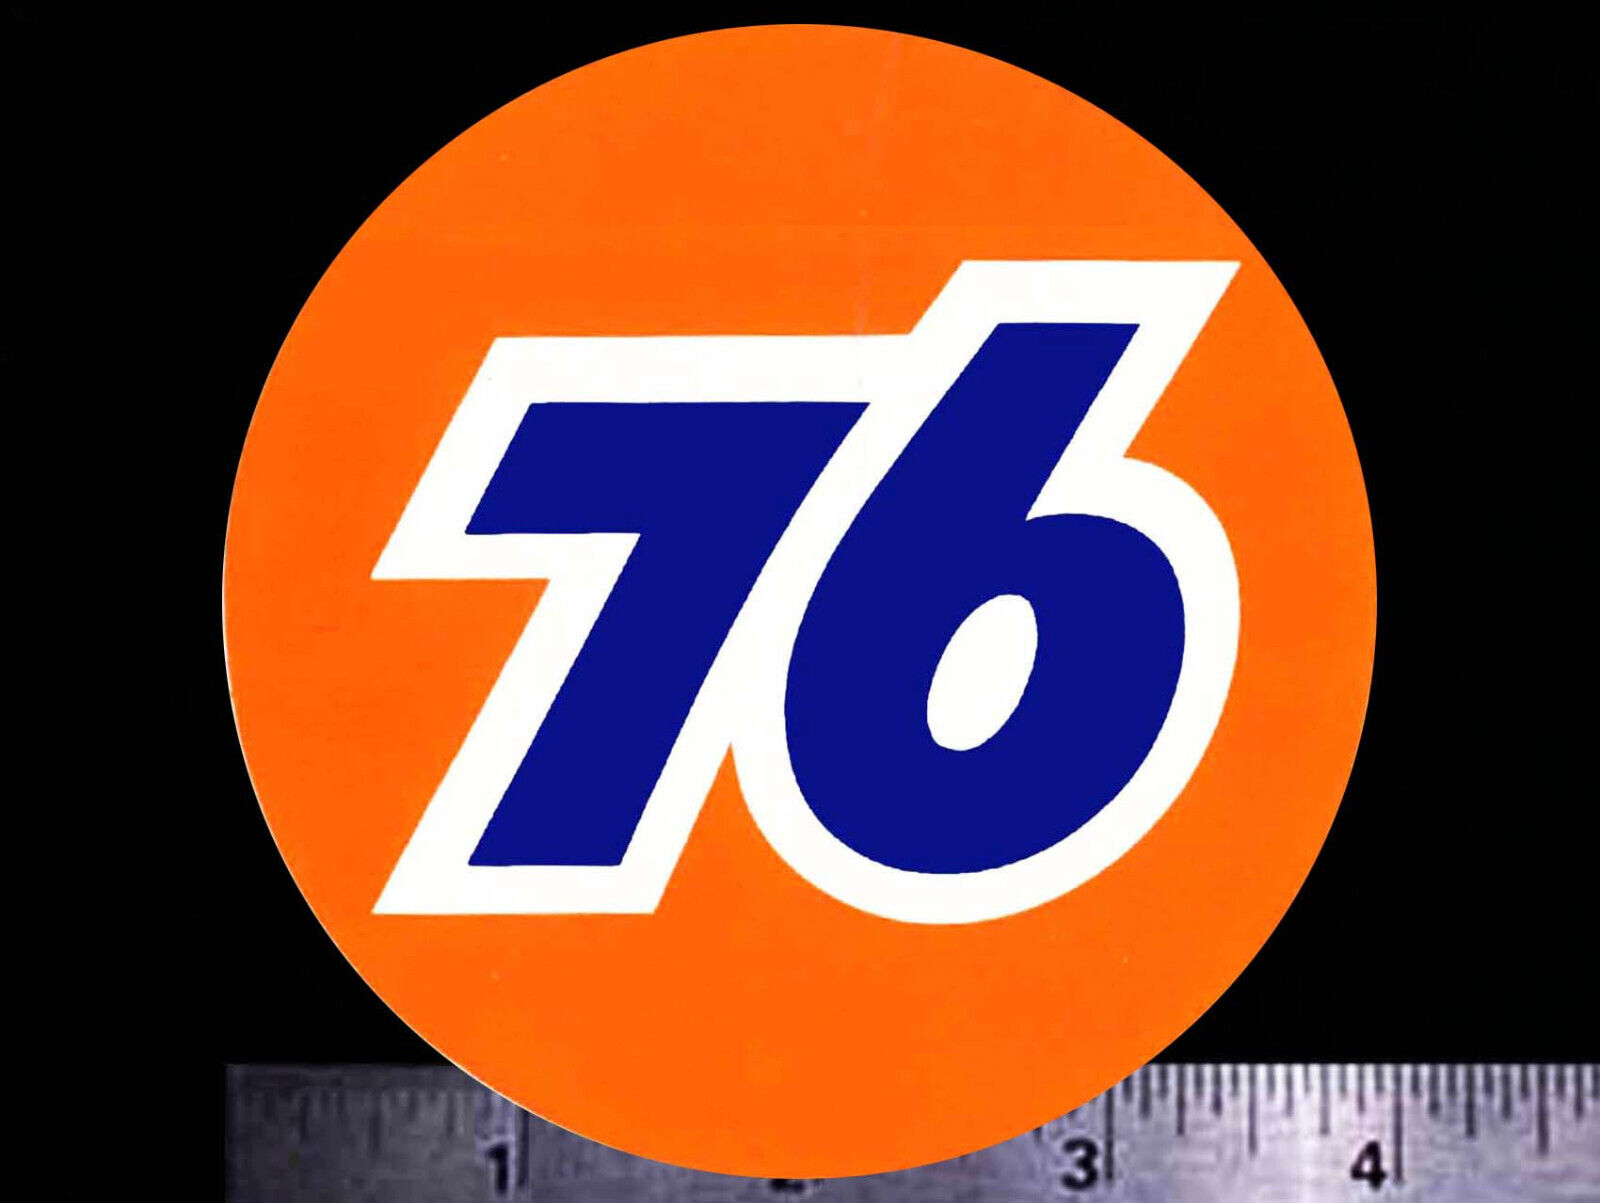 UNION 76 - Original Vintage 1970's Racing Decal/Sticker - Union Oil Company